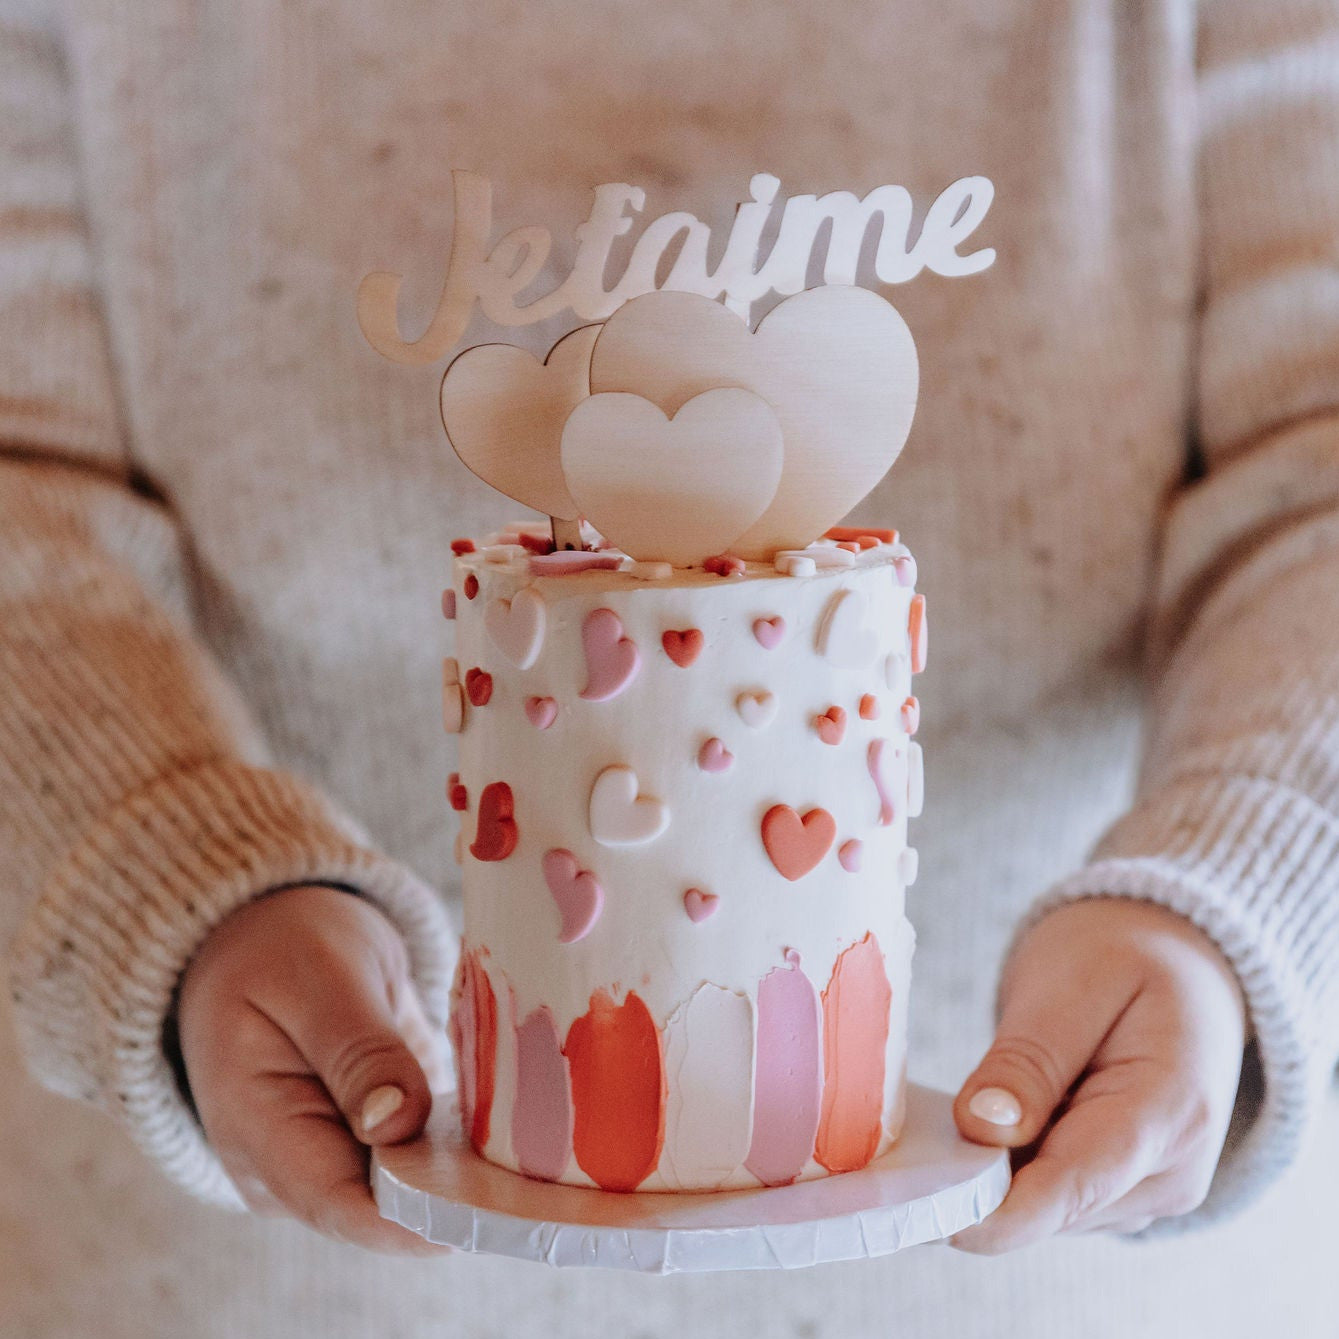 « I Love You » cake topper